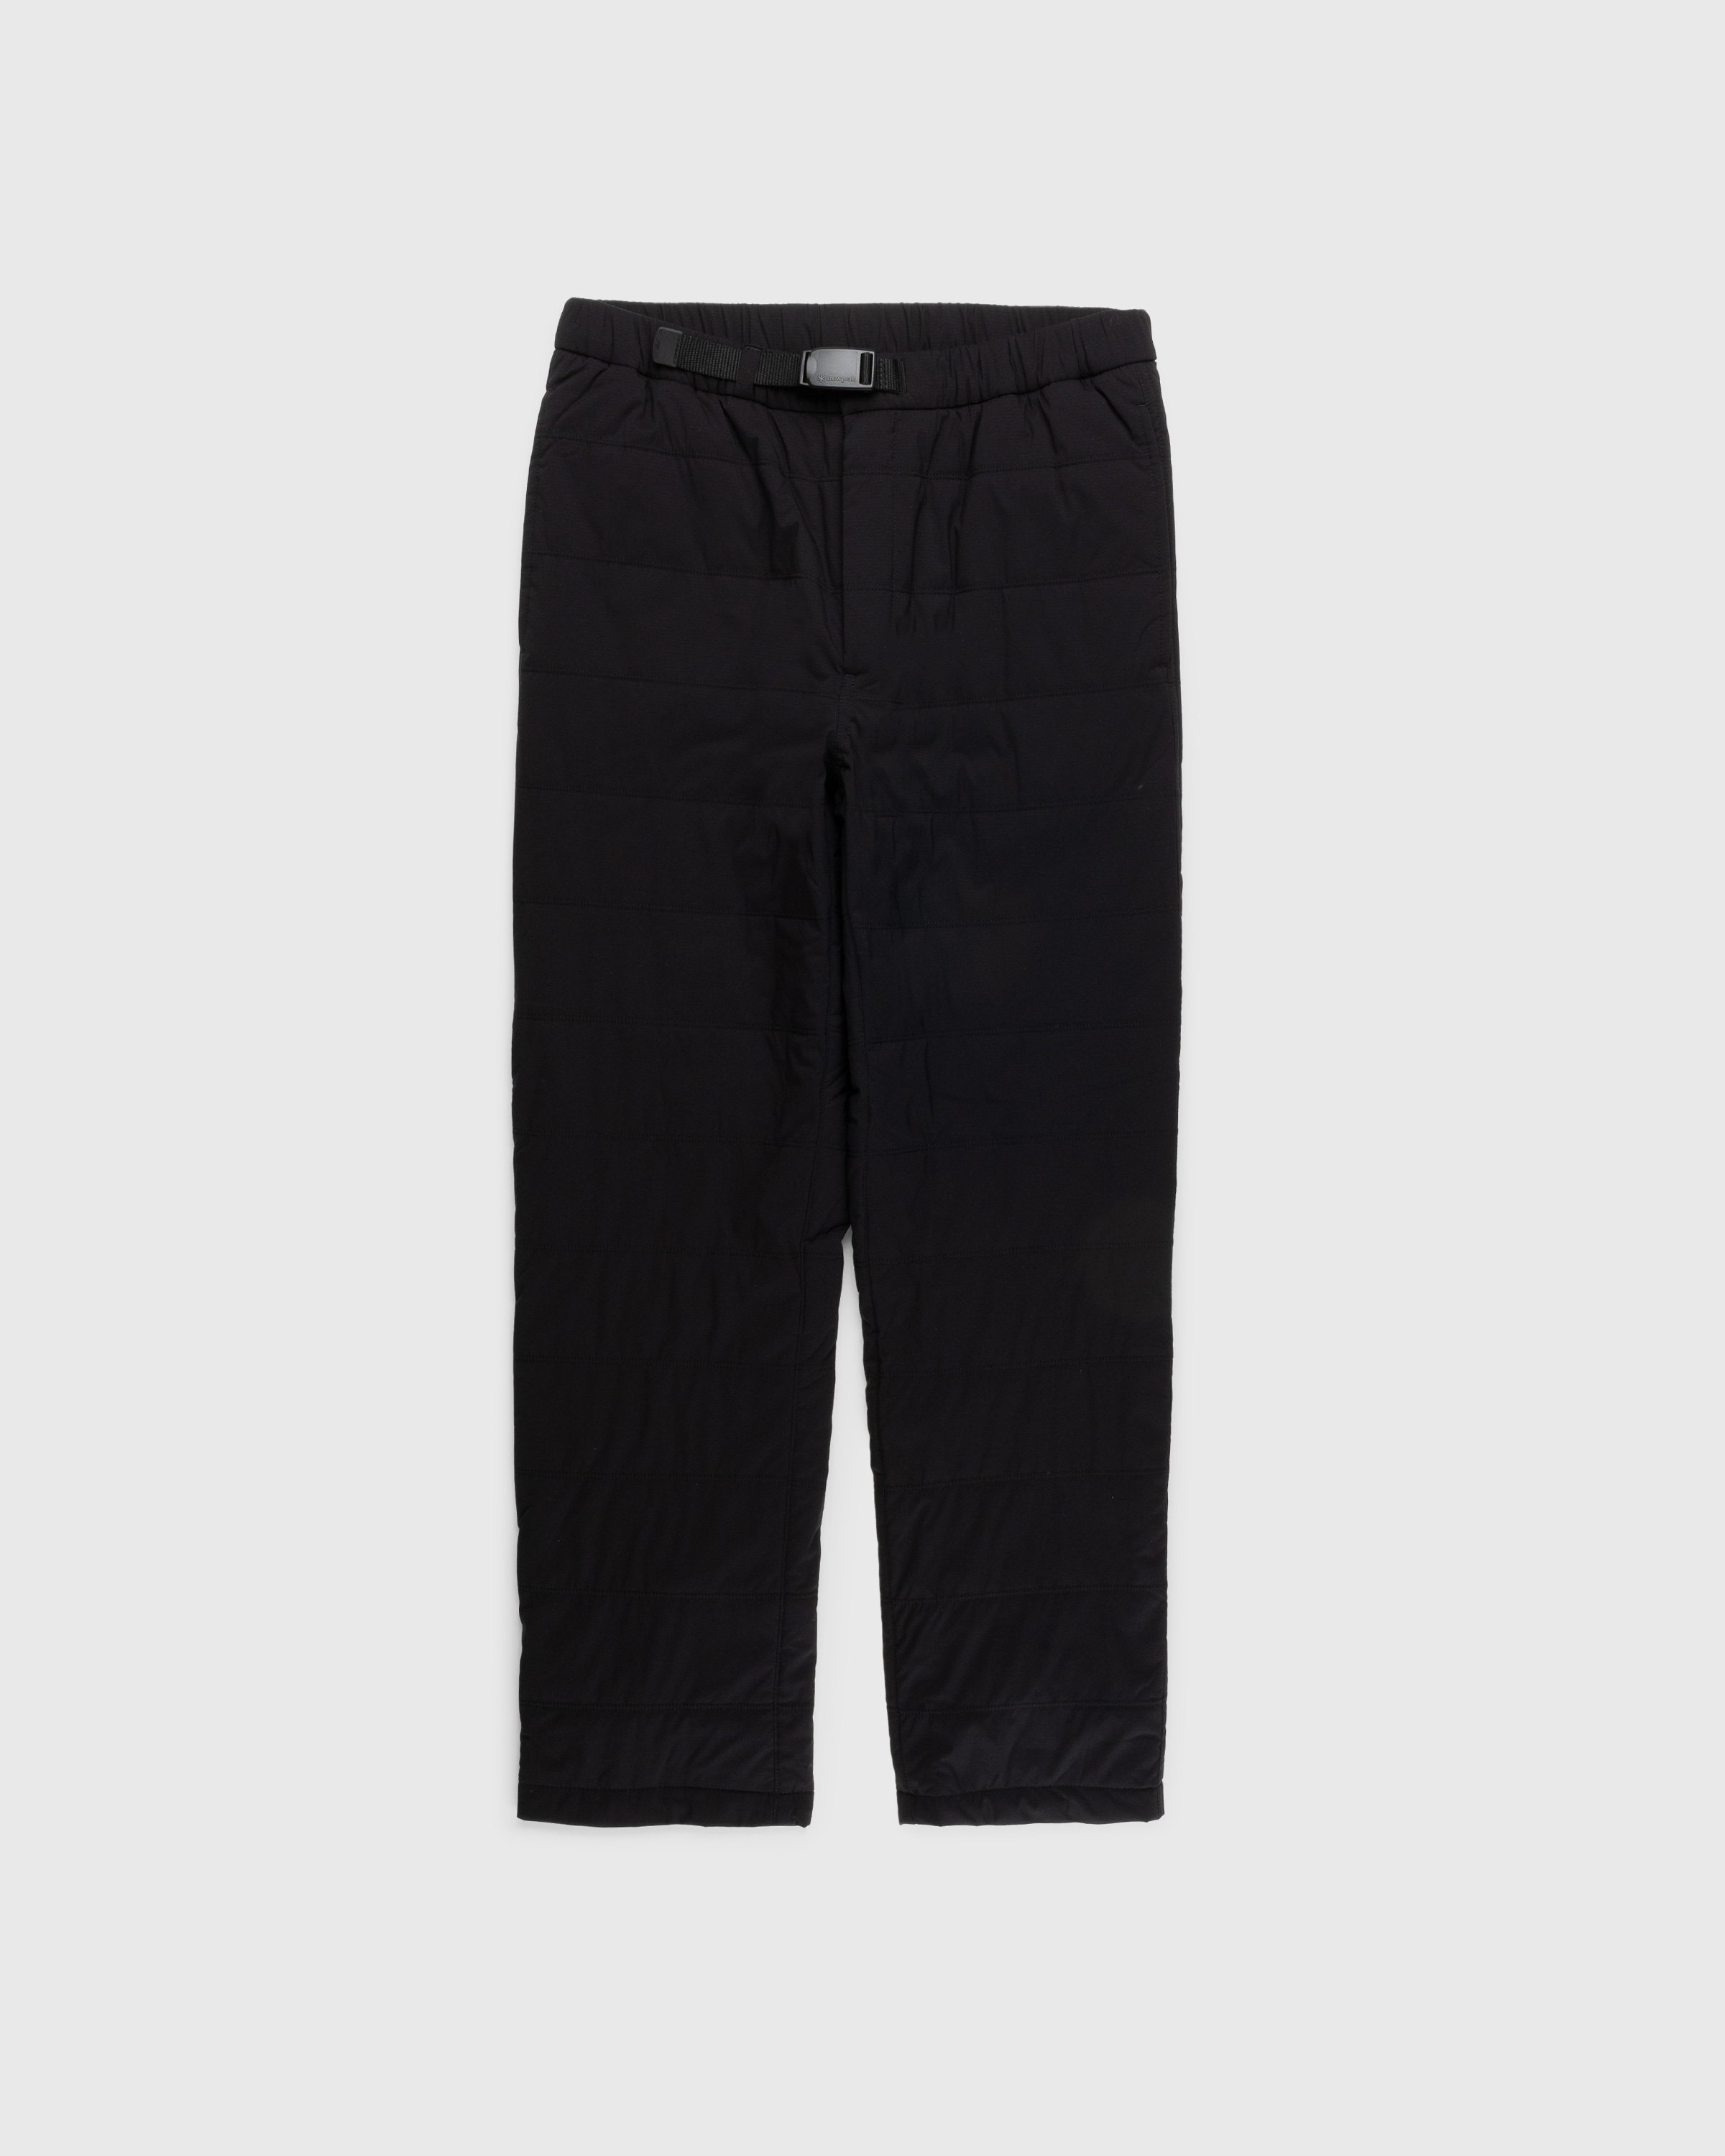 Snow Peak - Flexible Insulated Pants Black - Clothing - Black - Image 1